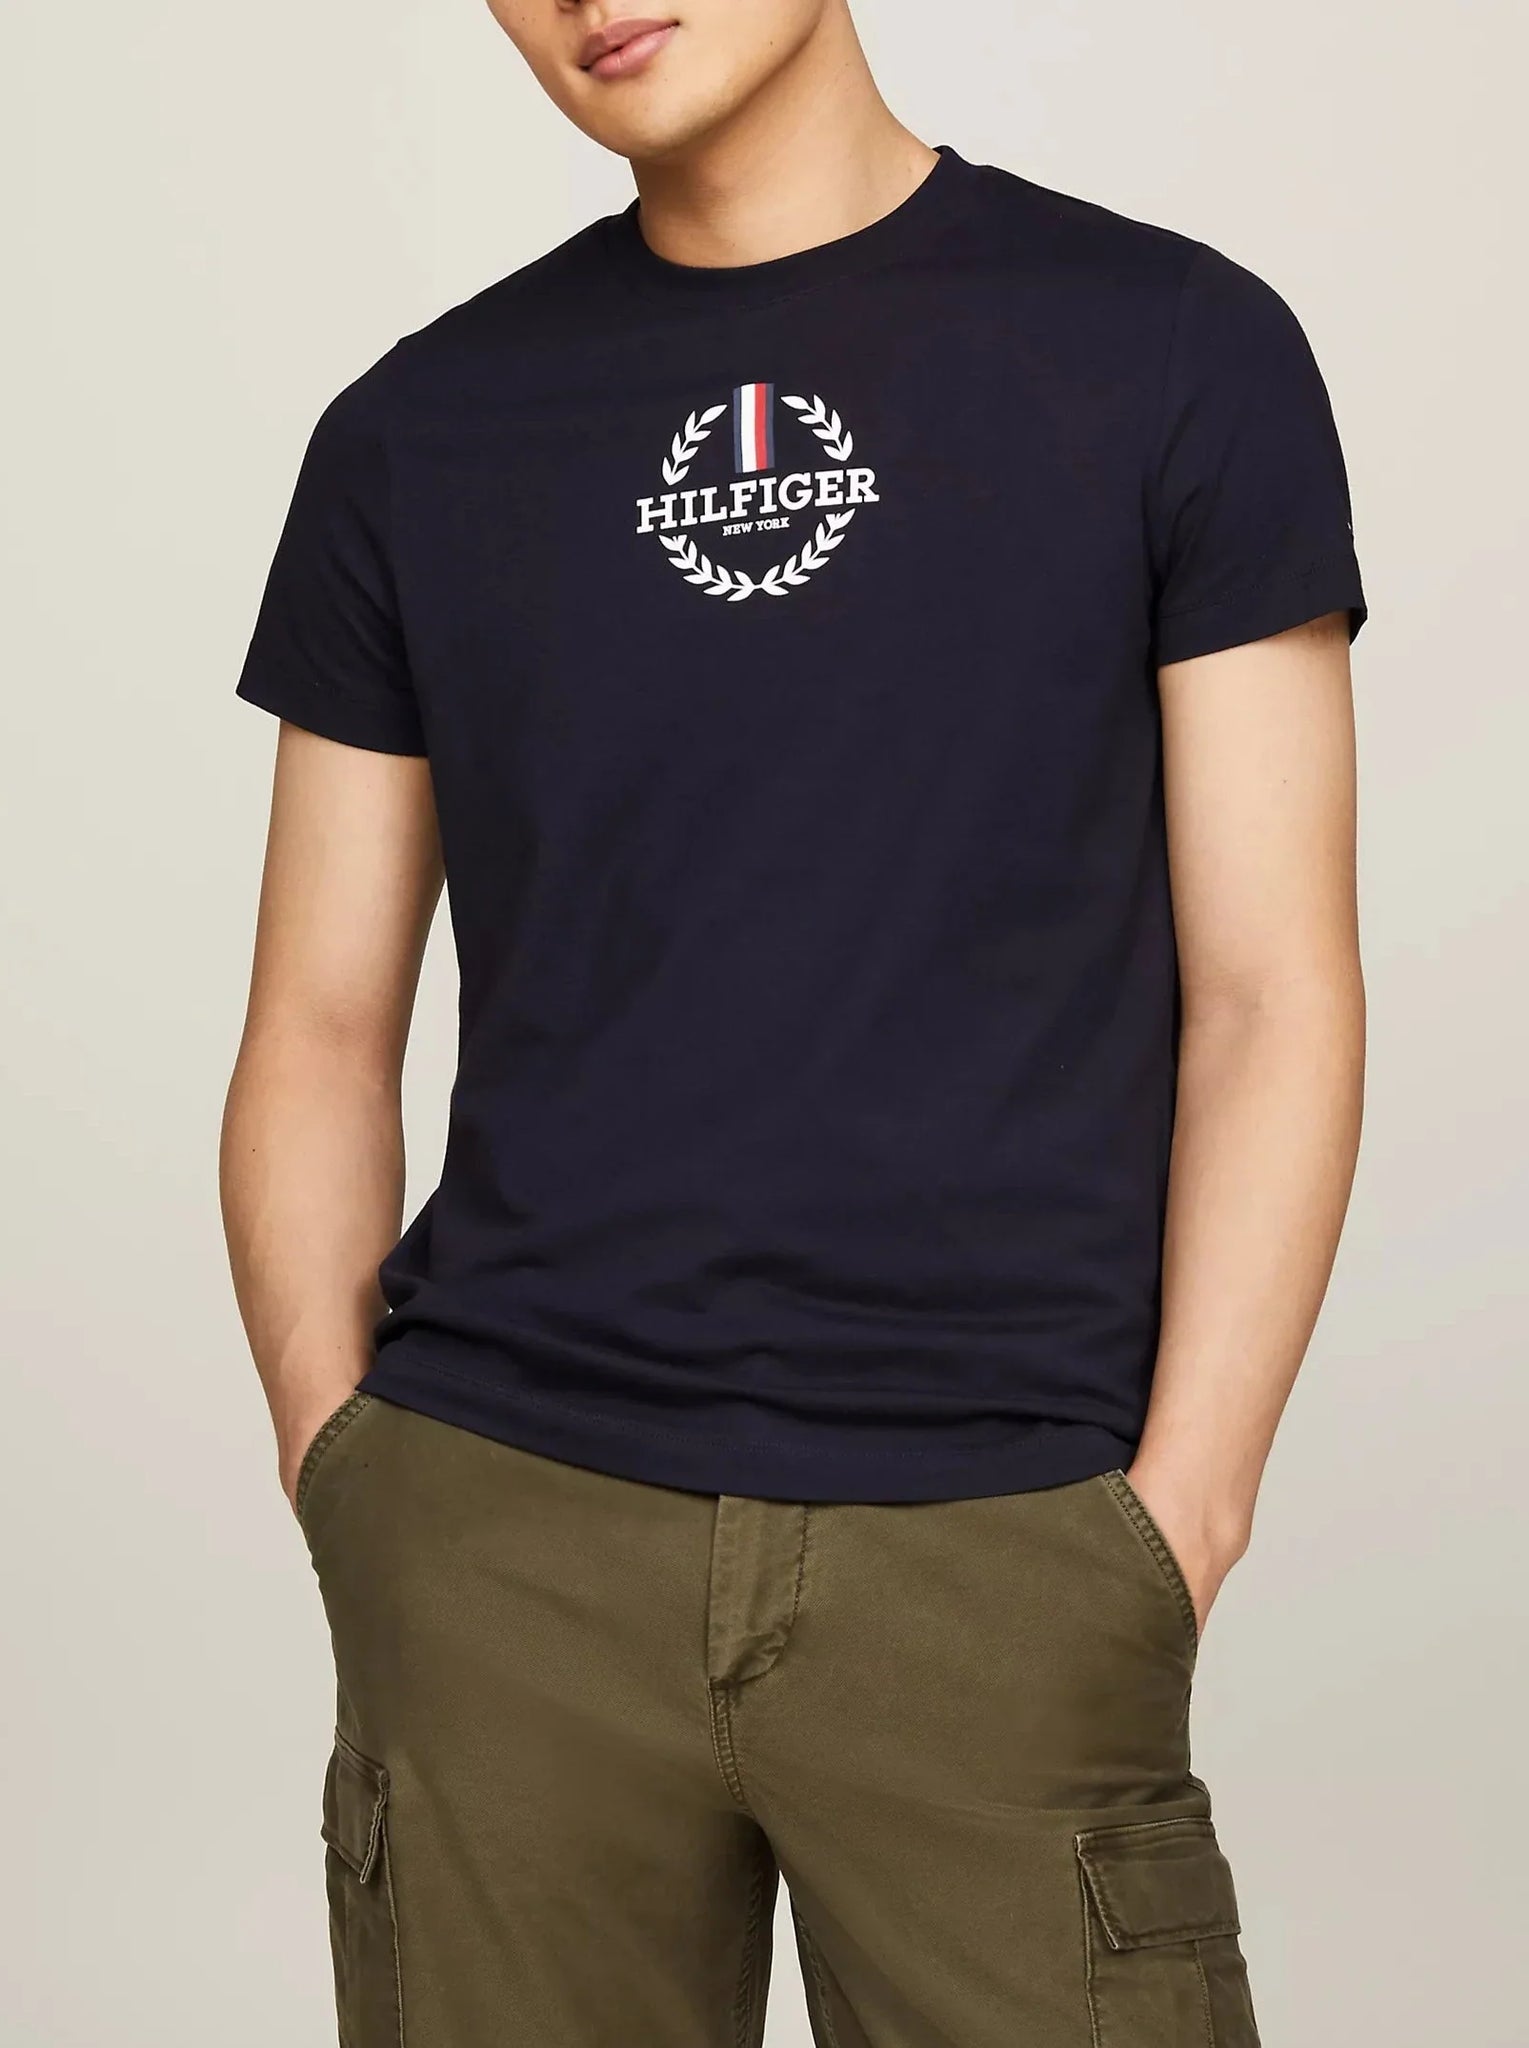 T-shirt Slim Fit - GLOBAL STRIPE TOMMY HILFIGER